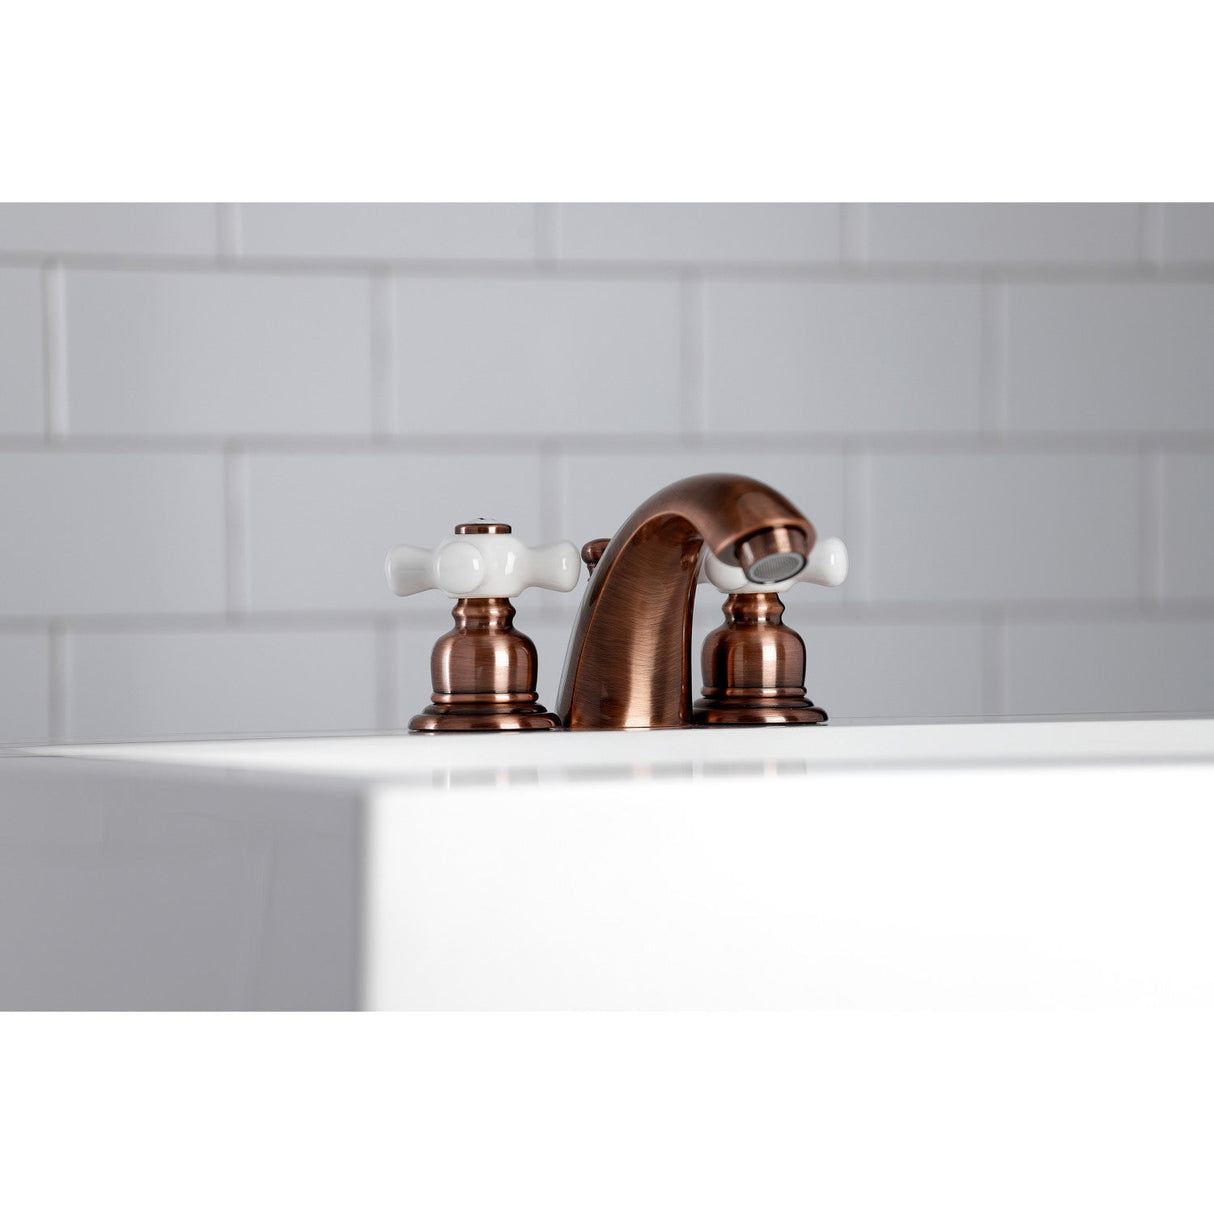 Victorian KB956PX Two-Handle 3-Hole Deck Mount Mini-Widespread Bathroom Faucet with Plastic Pop-Up, Antique Copper